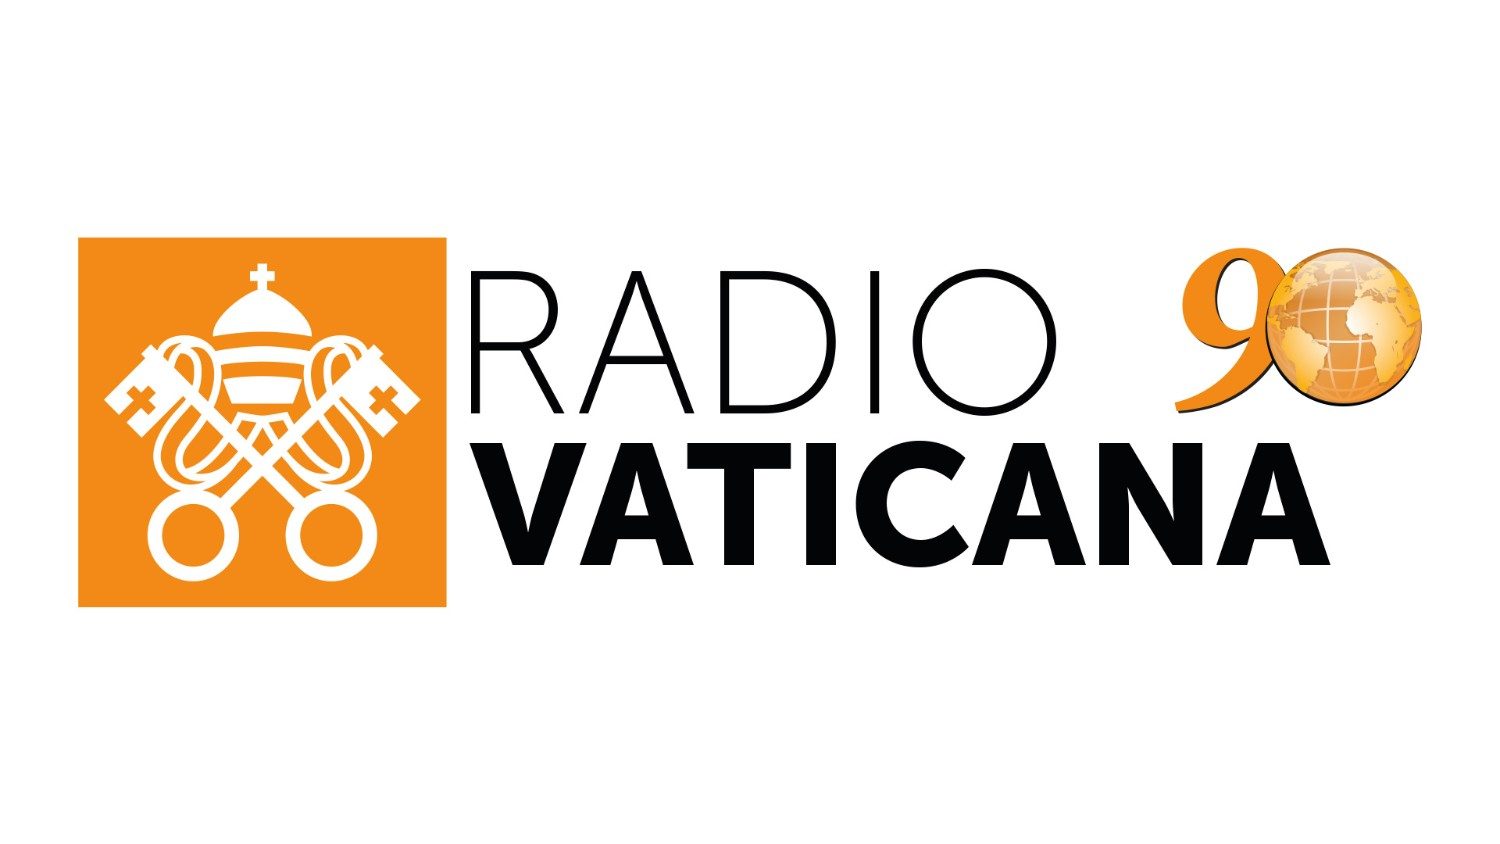 www.vaticannews.va